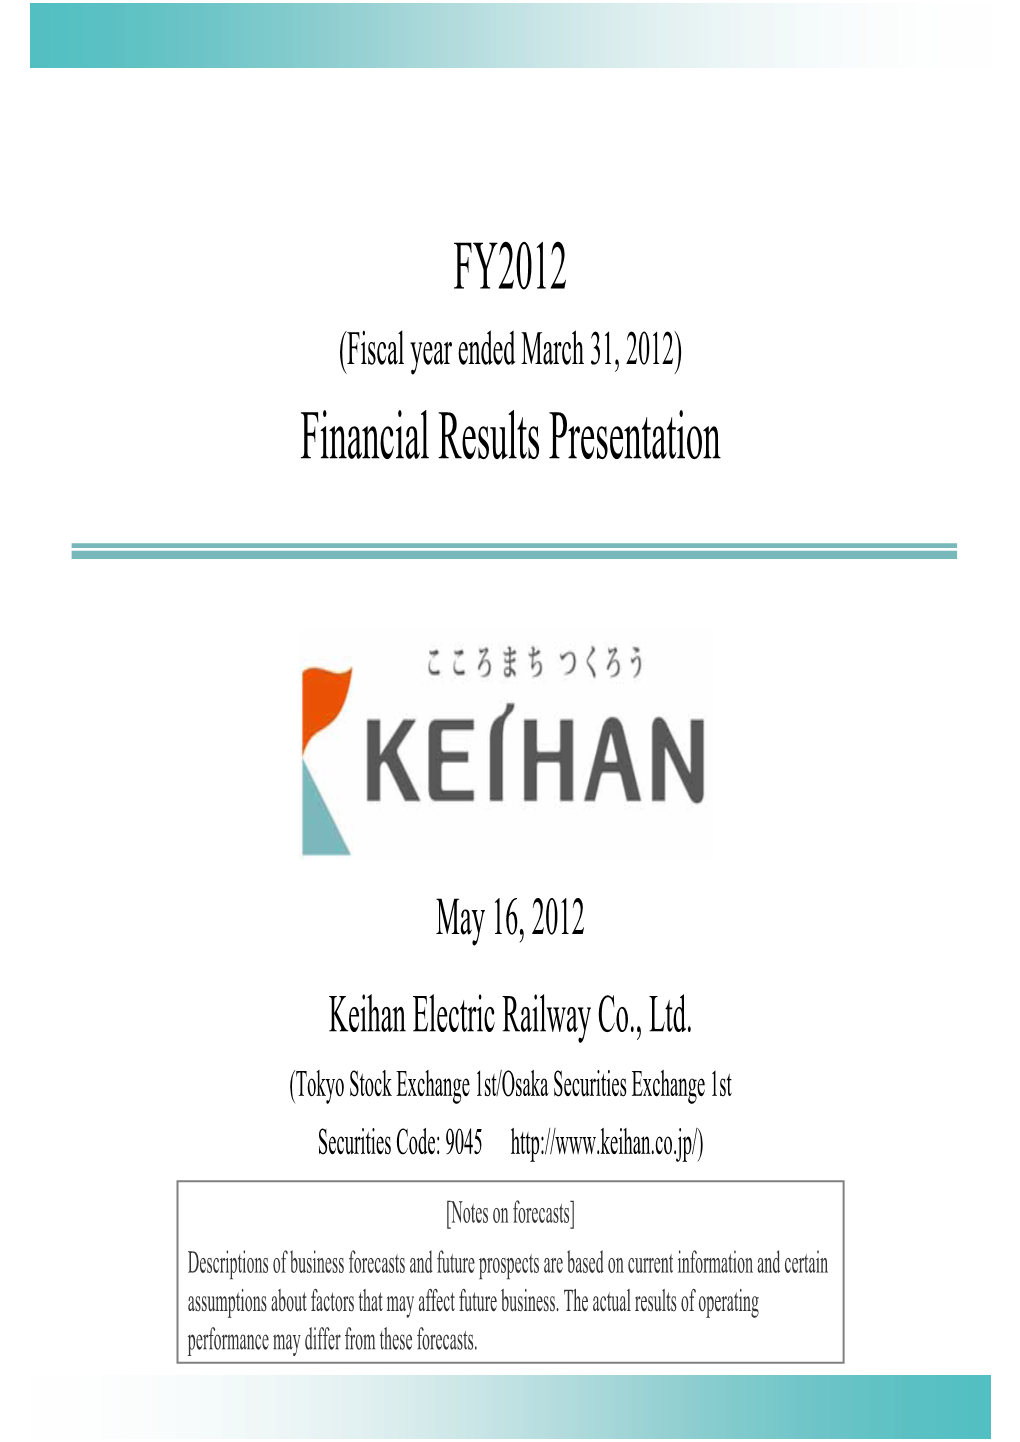 FY2012 Financial Results Presentation(361KB)